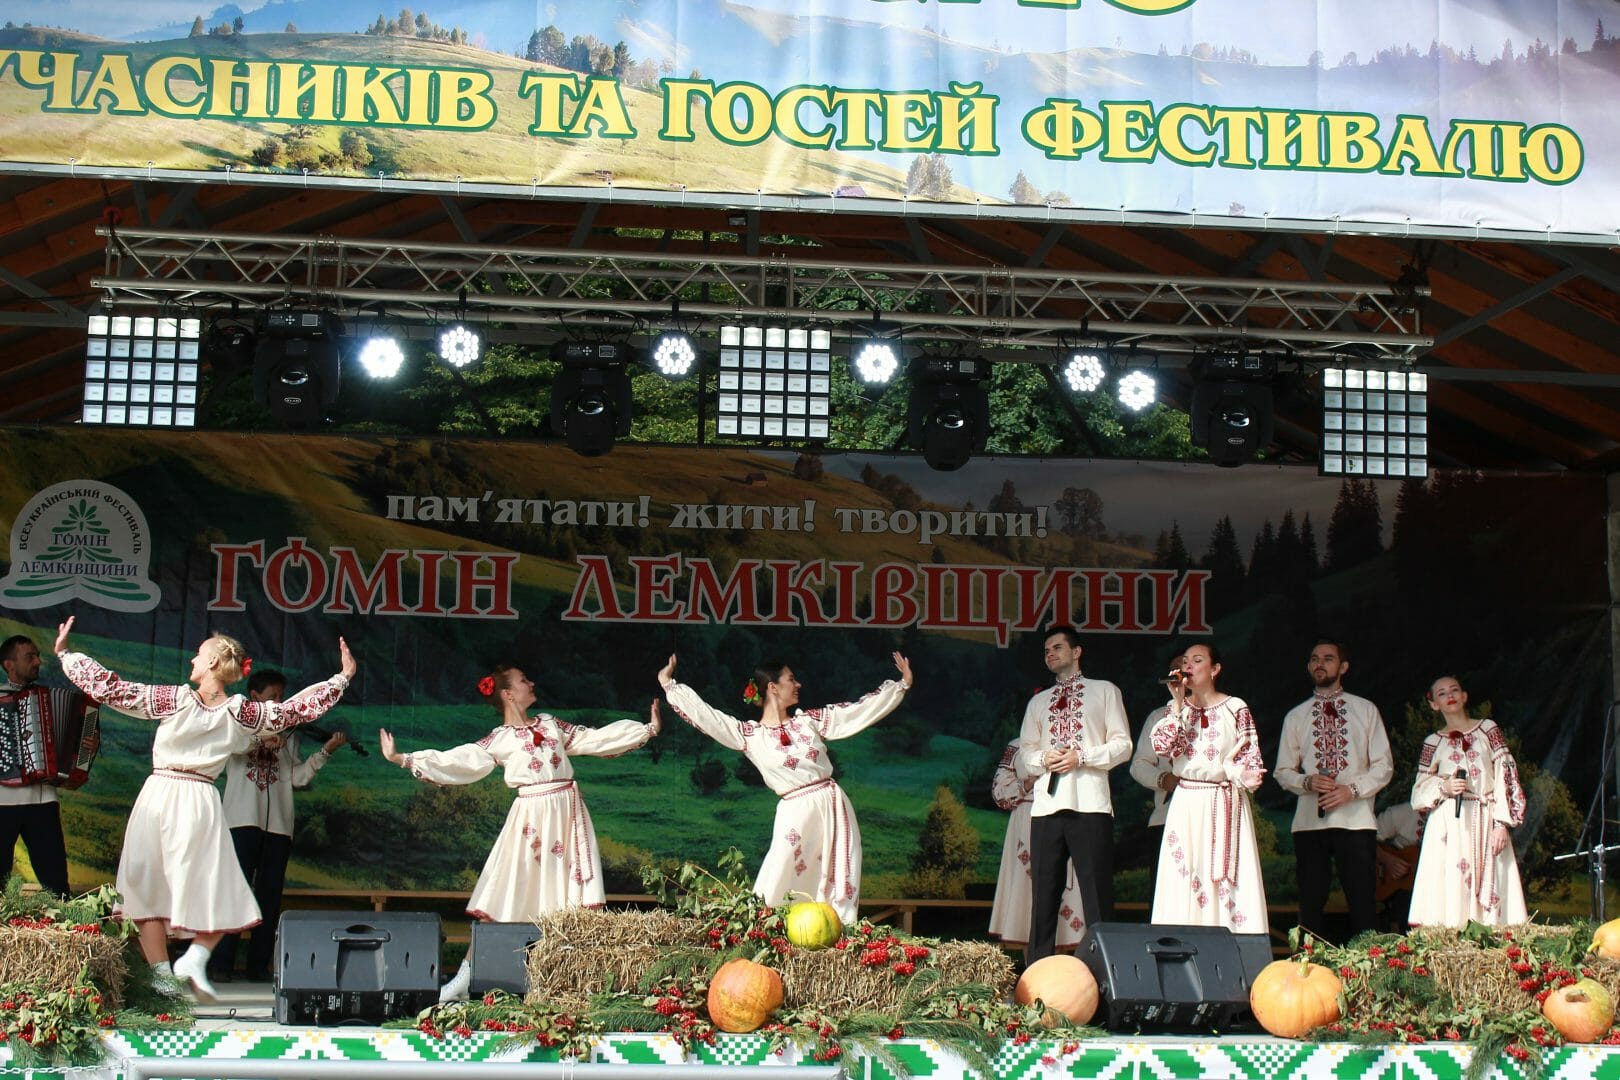 Performance of the folk dance ensemble at the Homin of Lemkivshchyna festival 